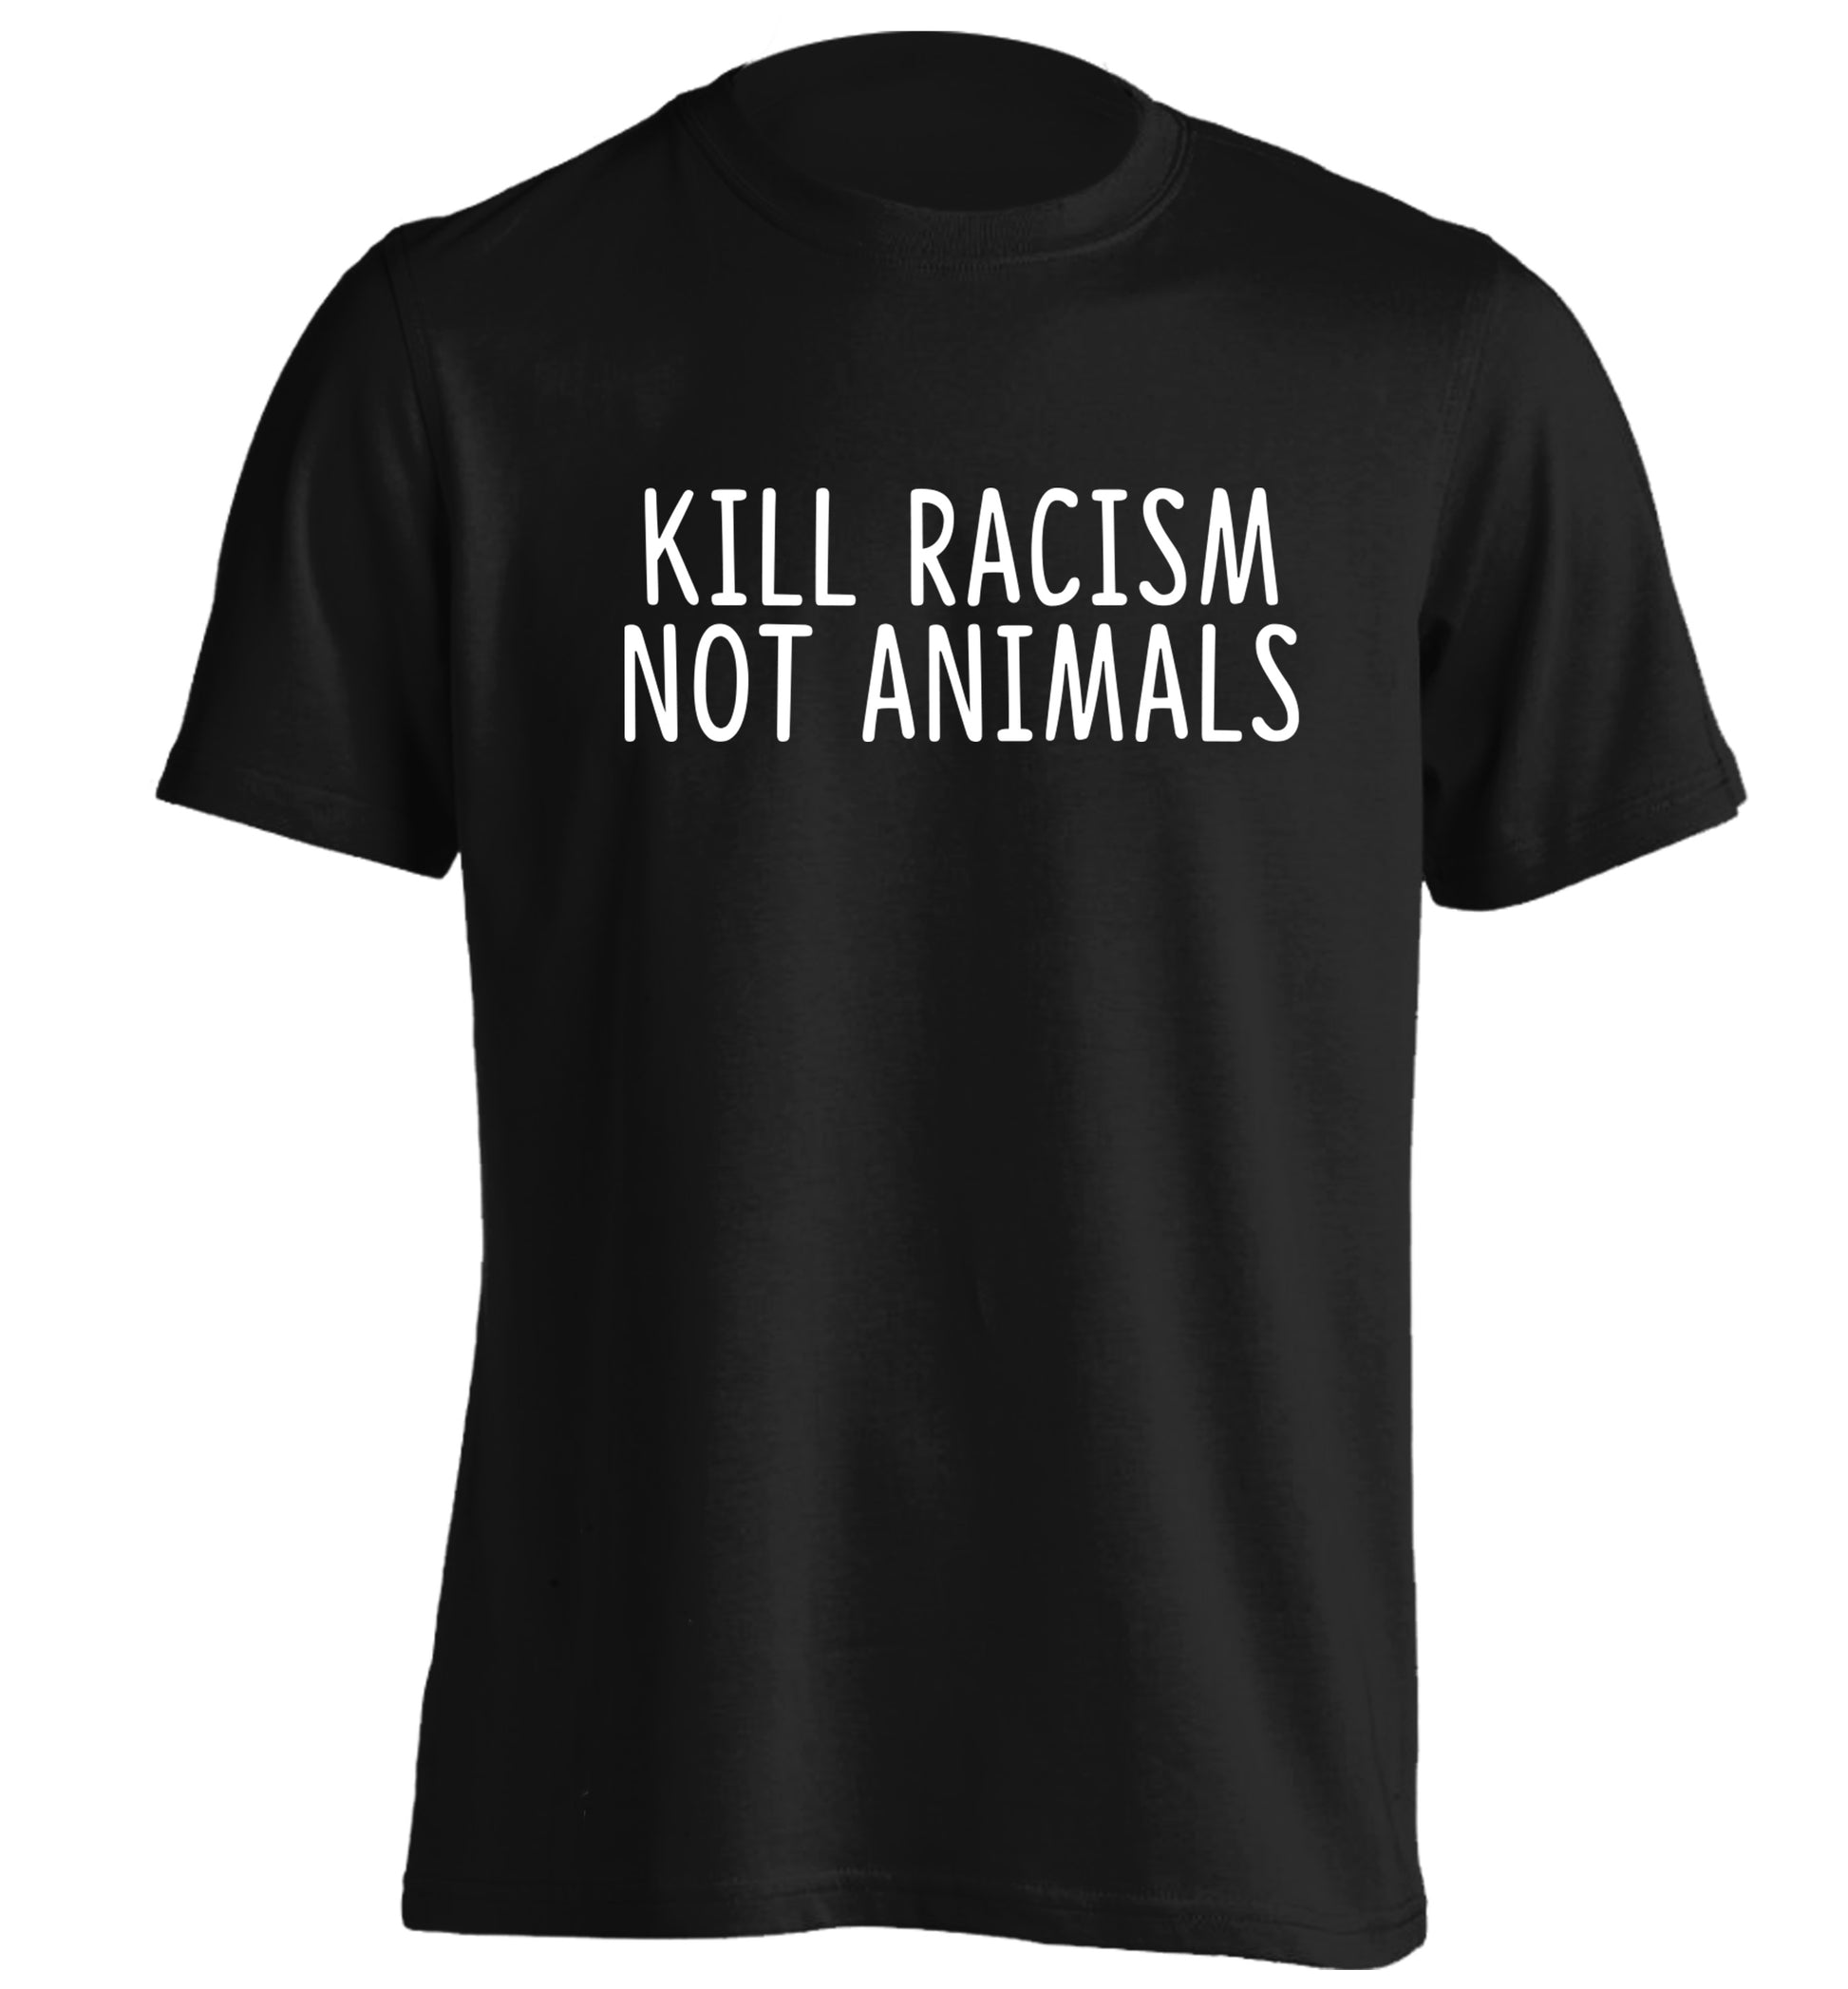 Kill Racism Not Animals adults unisex black Tshirt 2XL